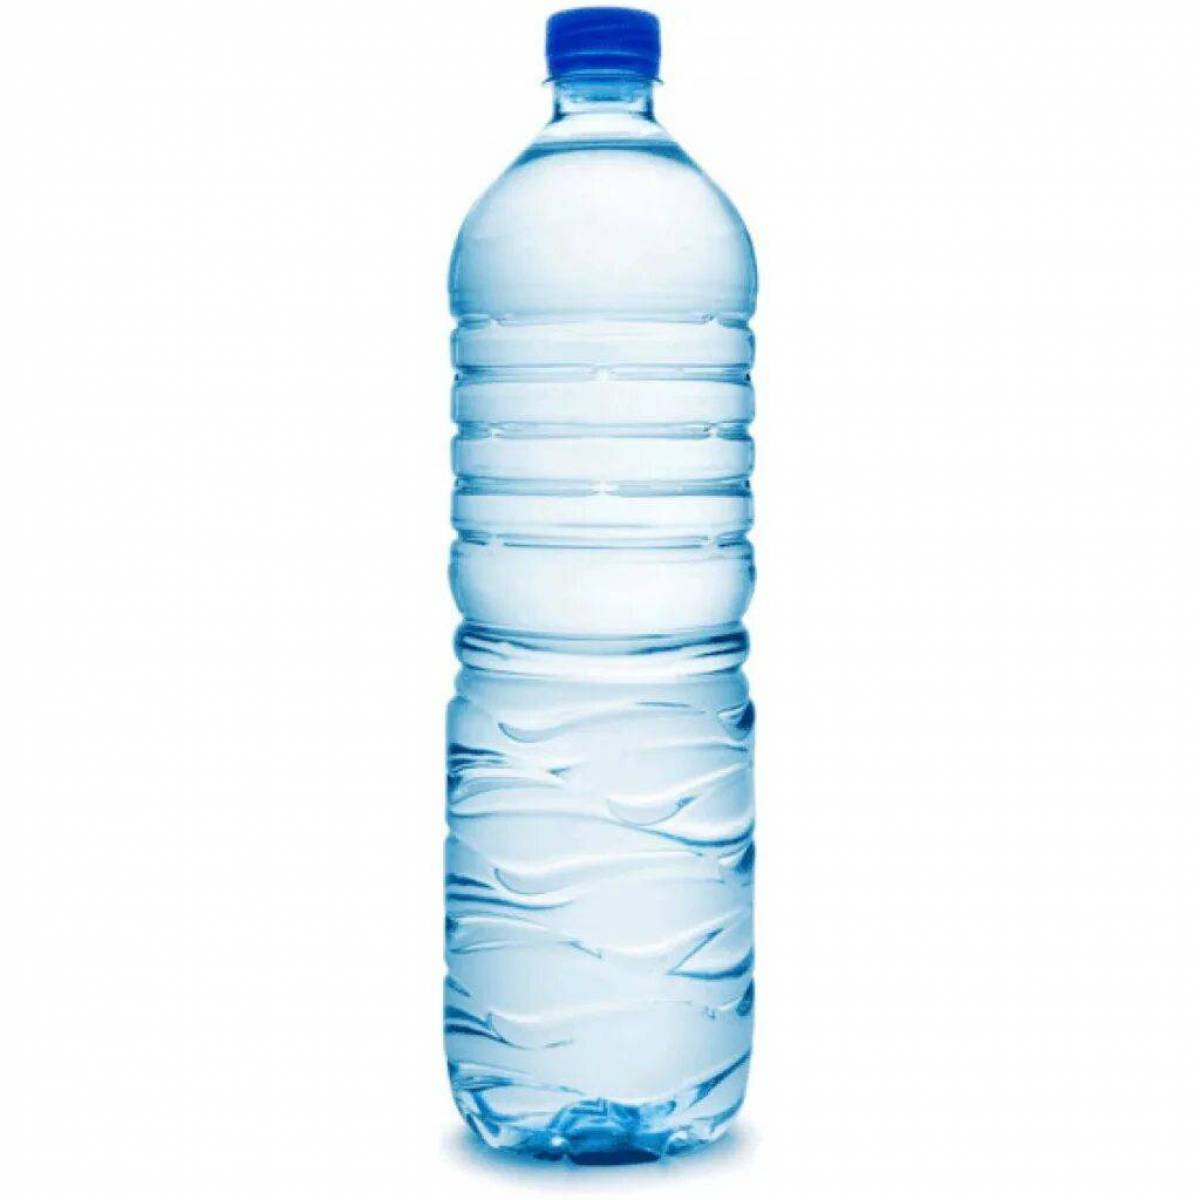 19 2 литр. Бутылка для воды. Пластиковая бутылка для воды. Бутылка для воды 1 литр. Бутылка для воды 1.5 литра.